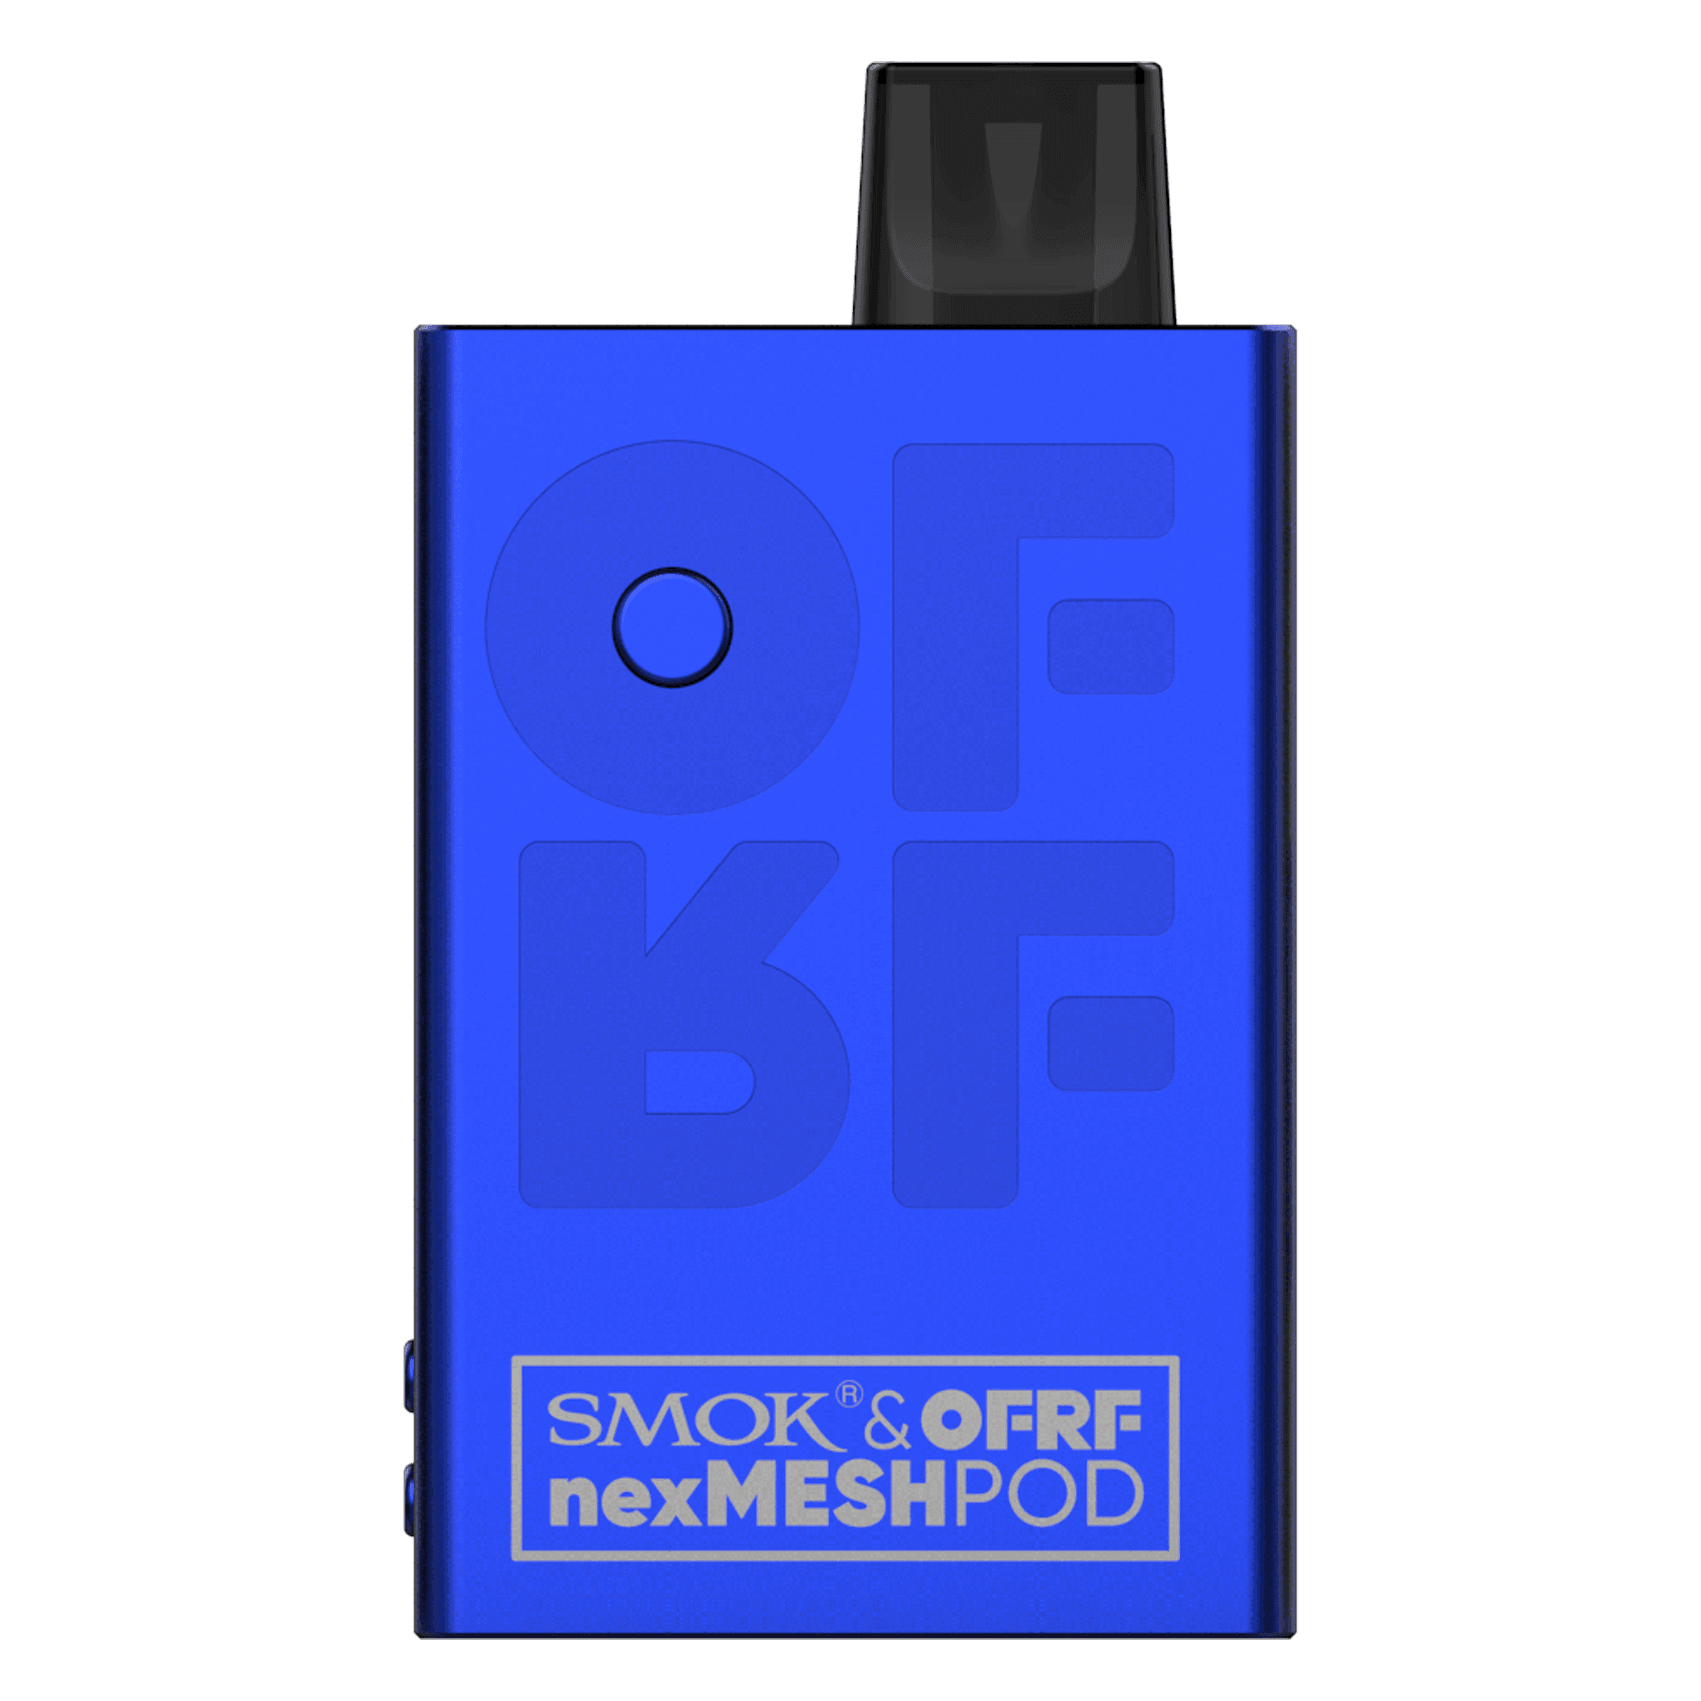 SMOK & OFRF NEXMESH POD BLUE - Vape Unit